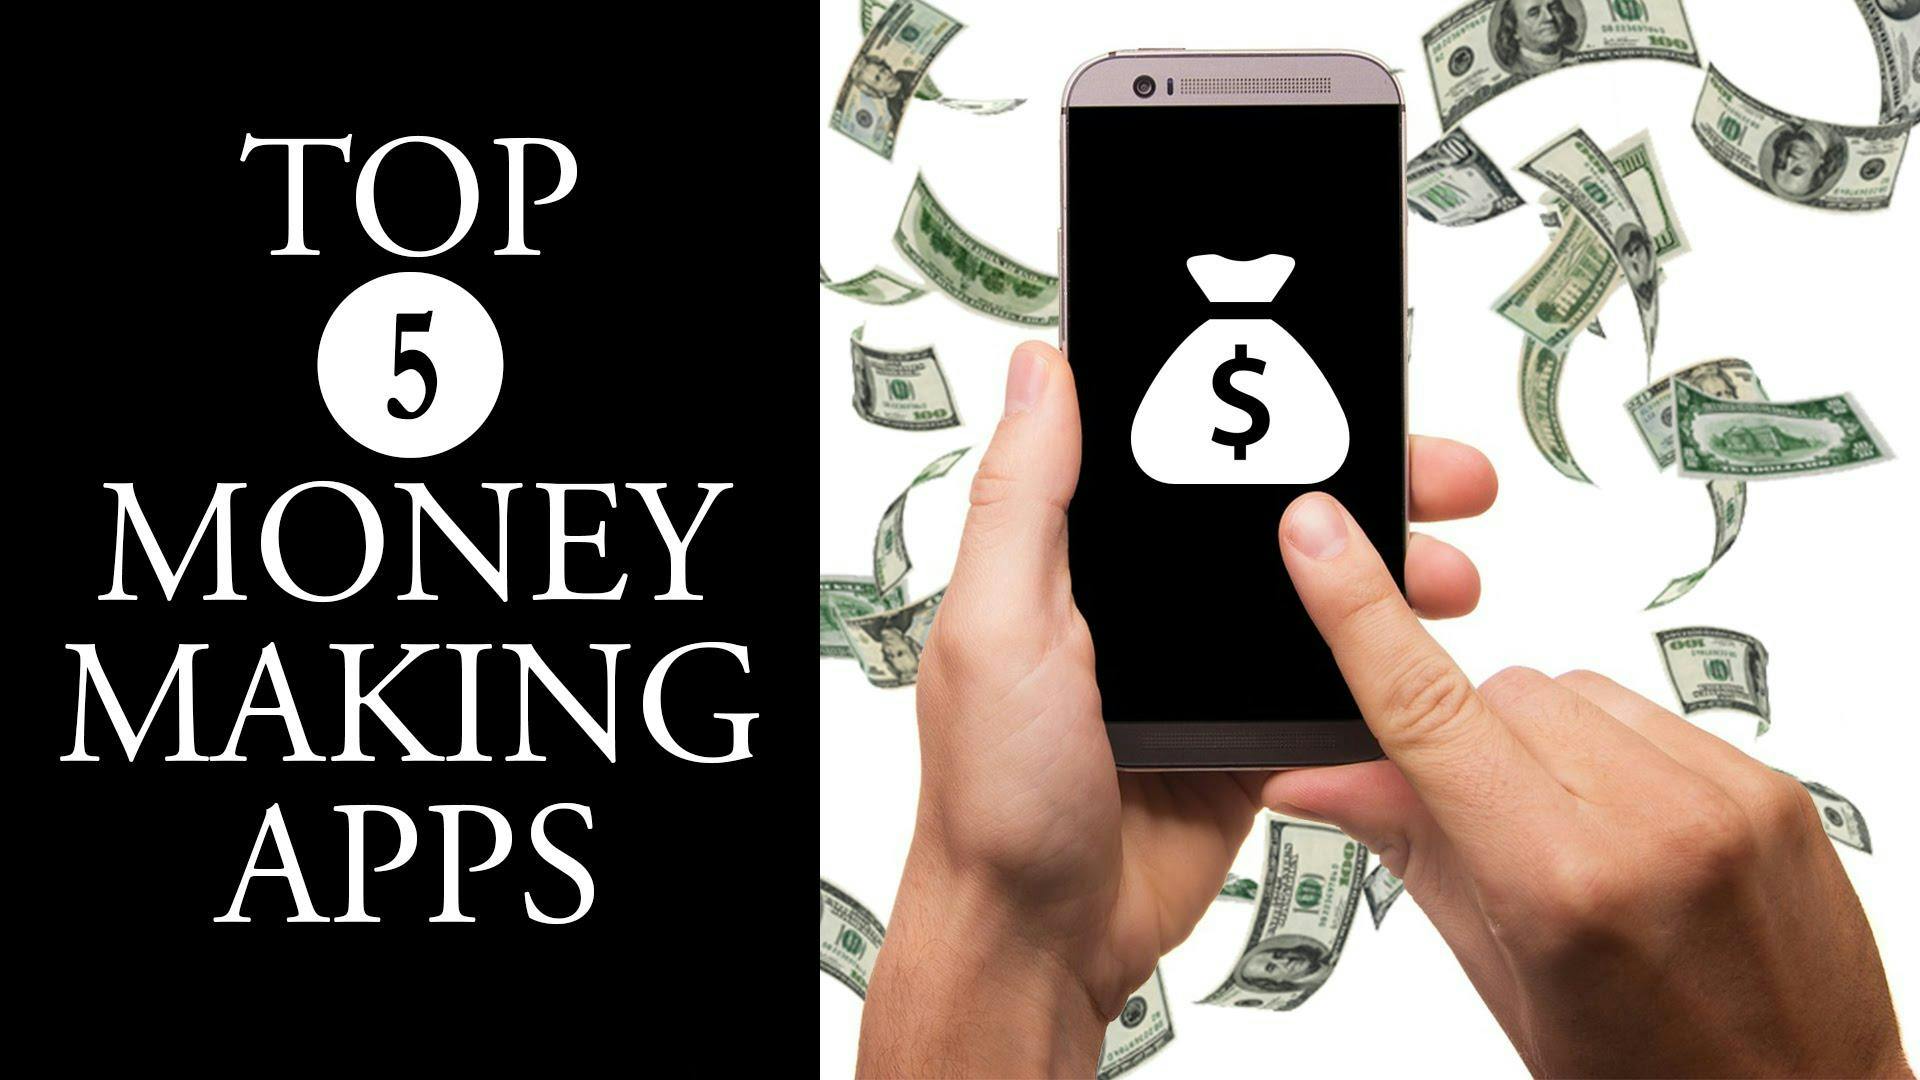 One like money. Make money обои на телефон. Топ мани. Money app. Apps to make money.